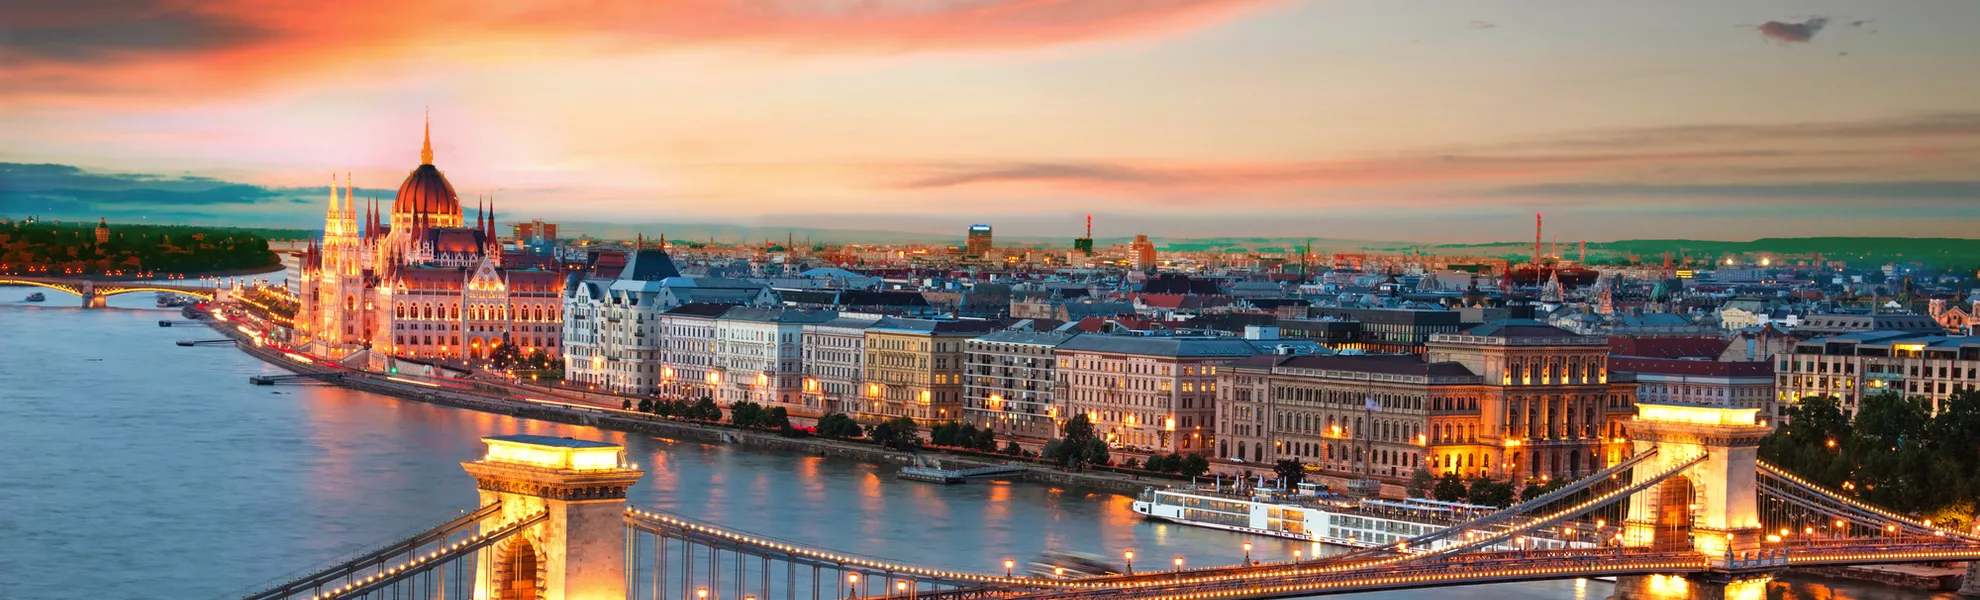 Sonnenuntergang über Budapest - © anko_ter - stock.adobe.com